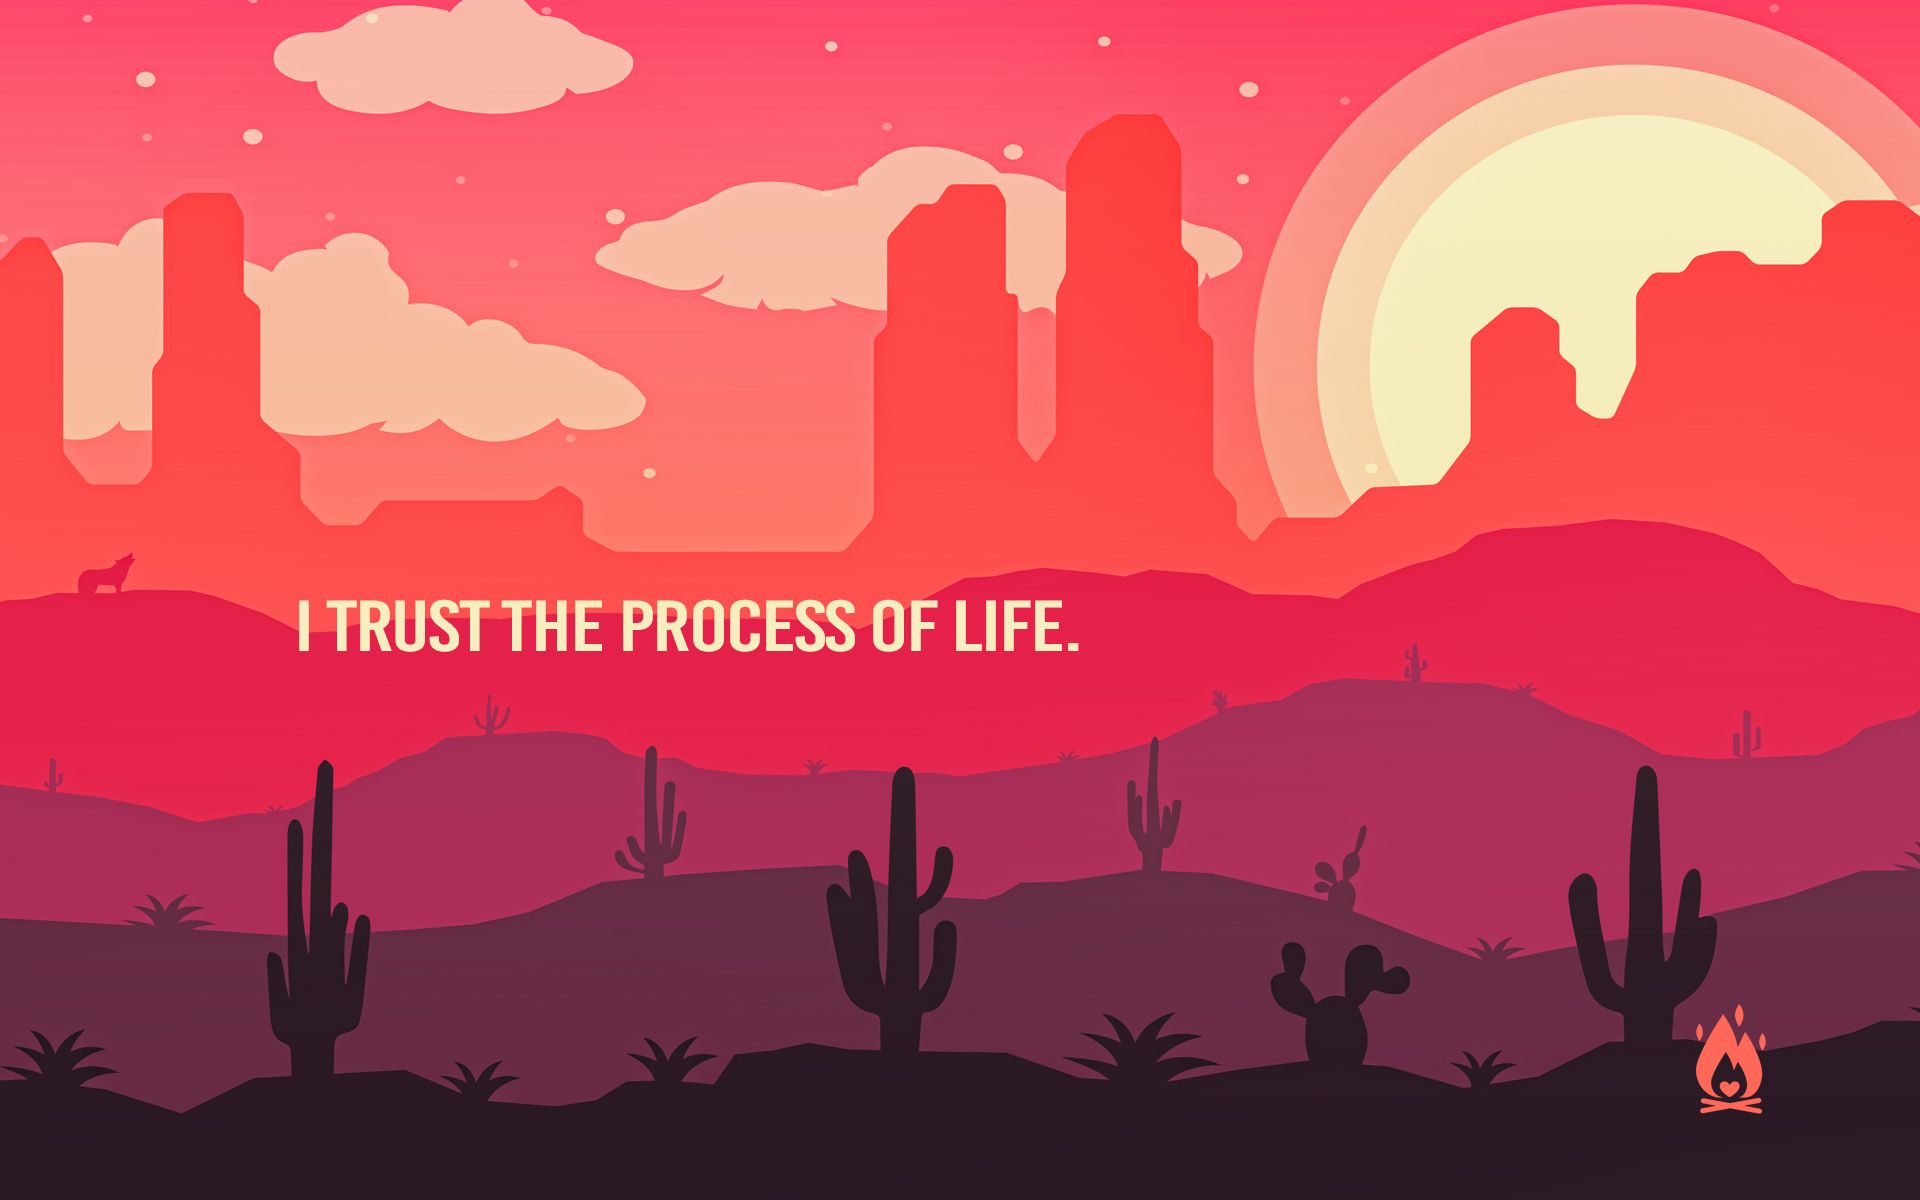 Trust The Process Wallpaper